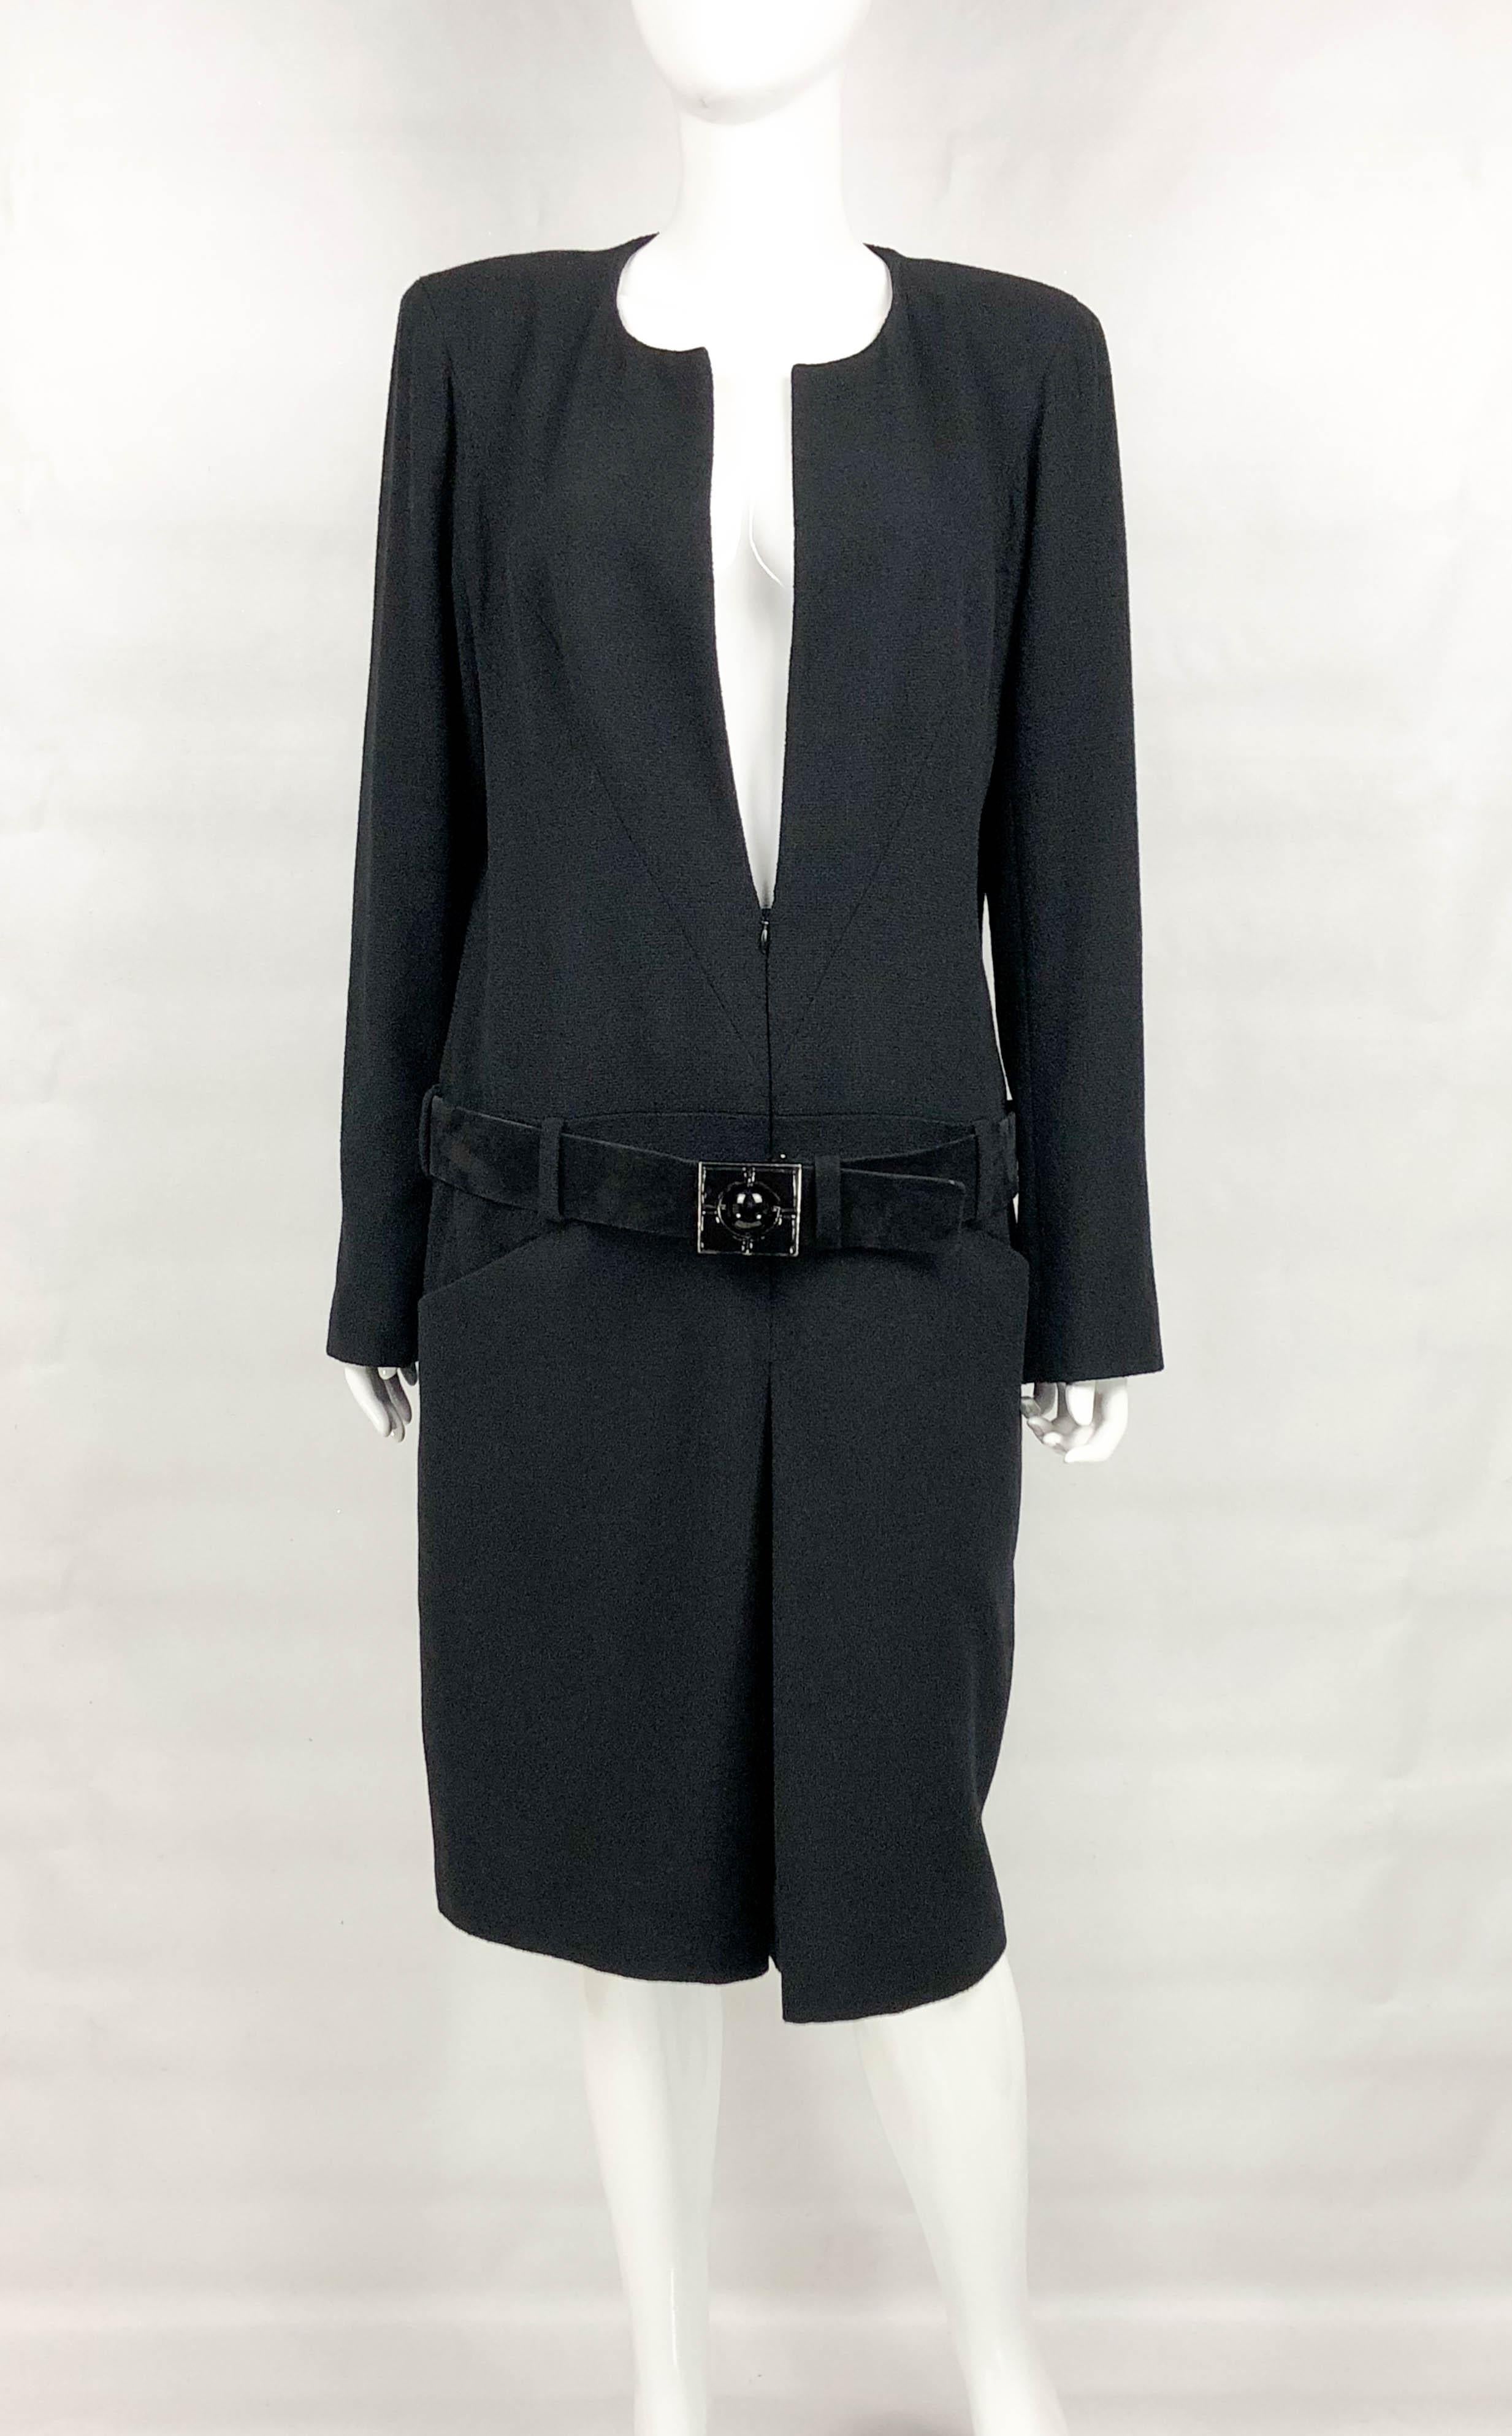 Women's 2009 Chanel Runway Look Black Wool Belted Dress / Coat (Large Size) For Sale